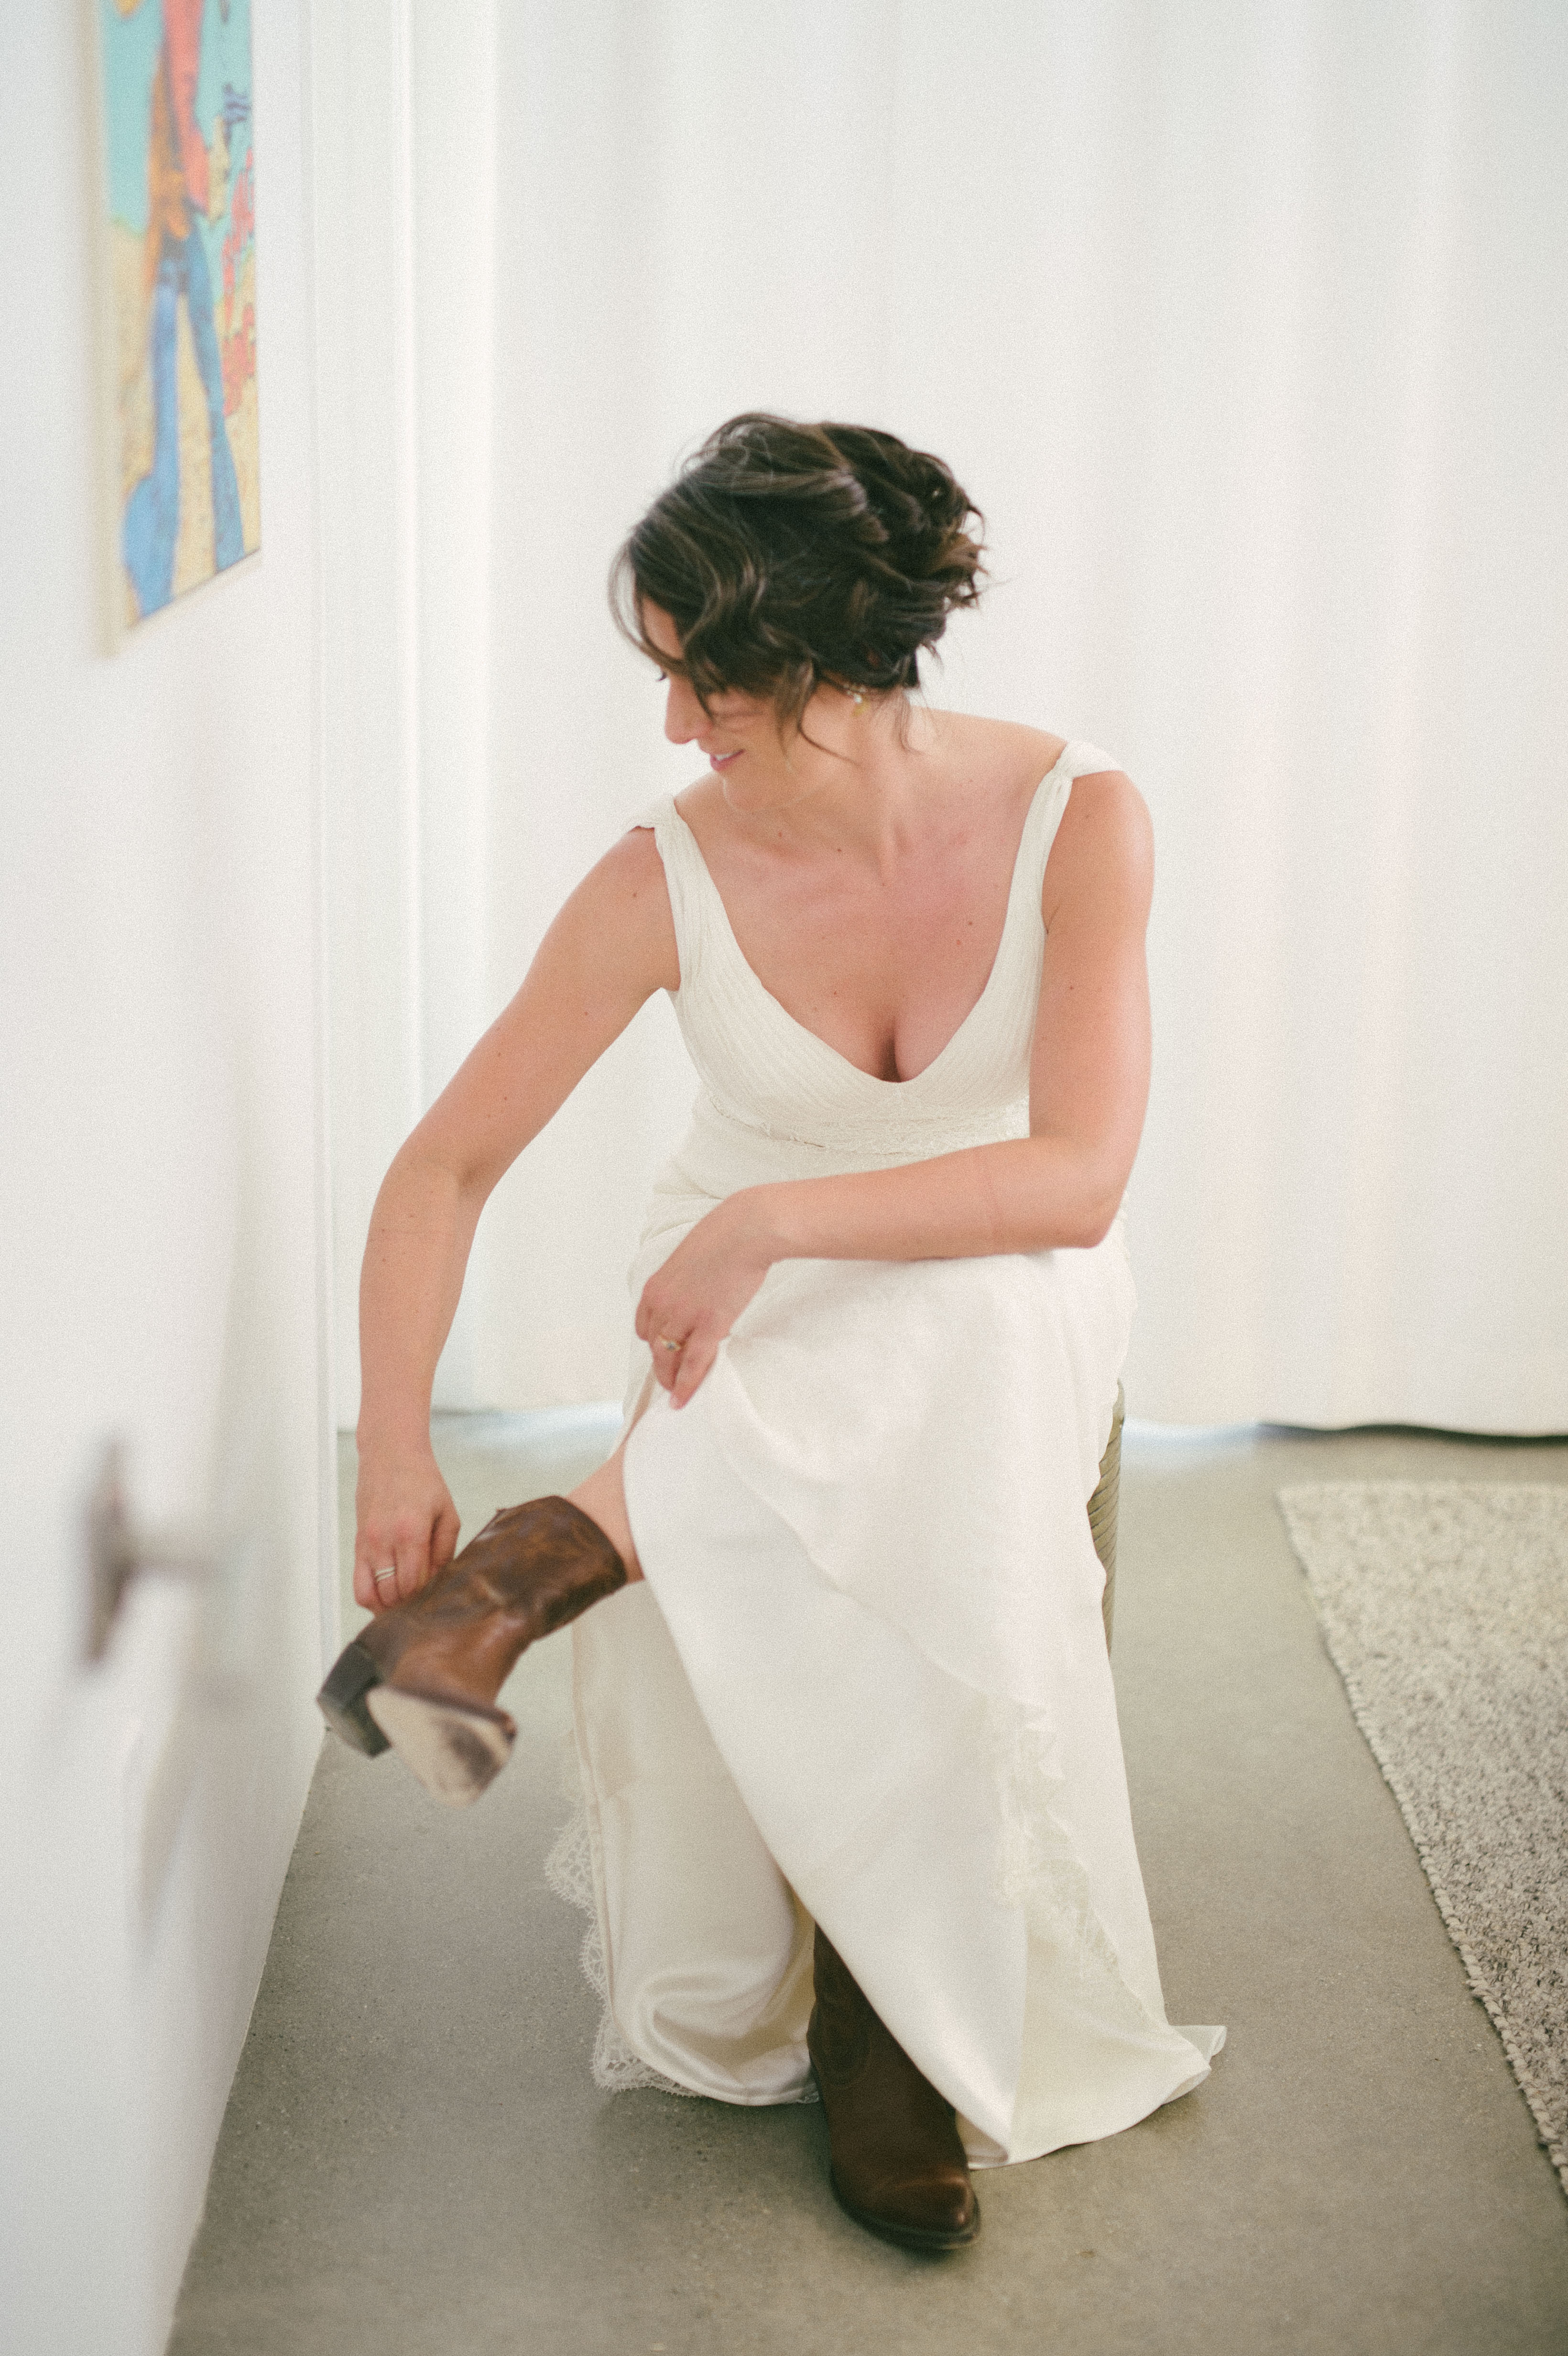 Heidi wore cowboy boots for her desert wedding